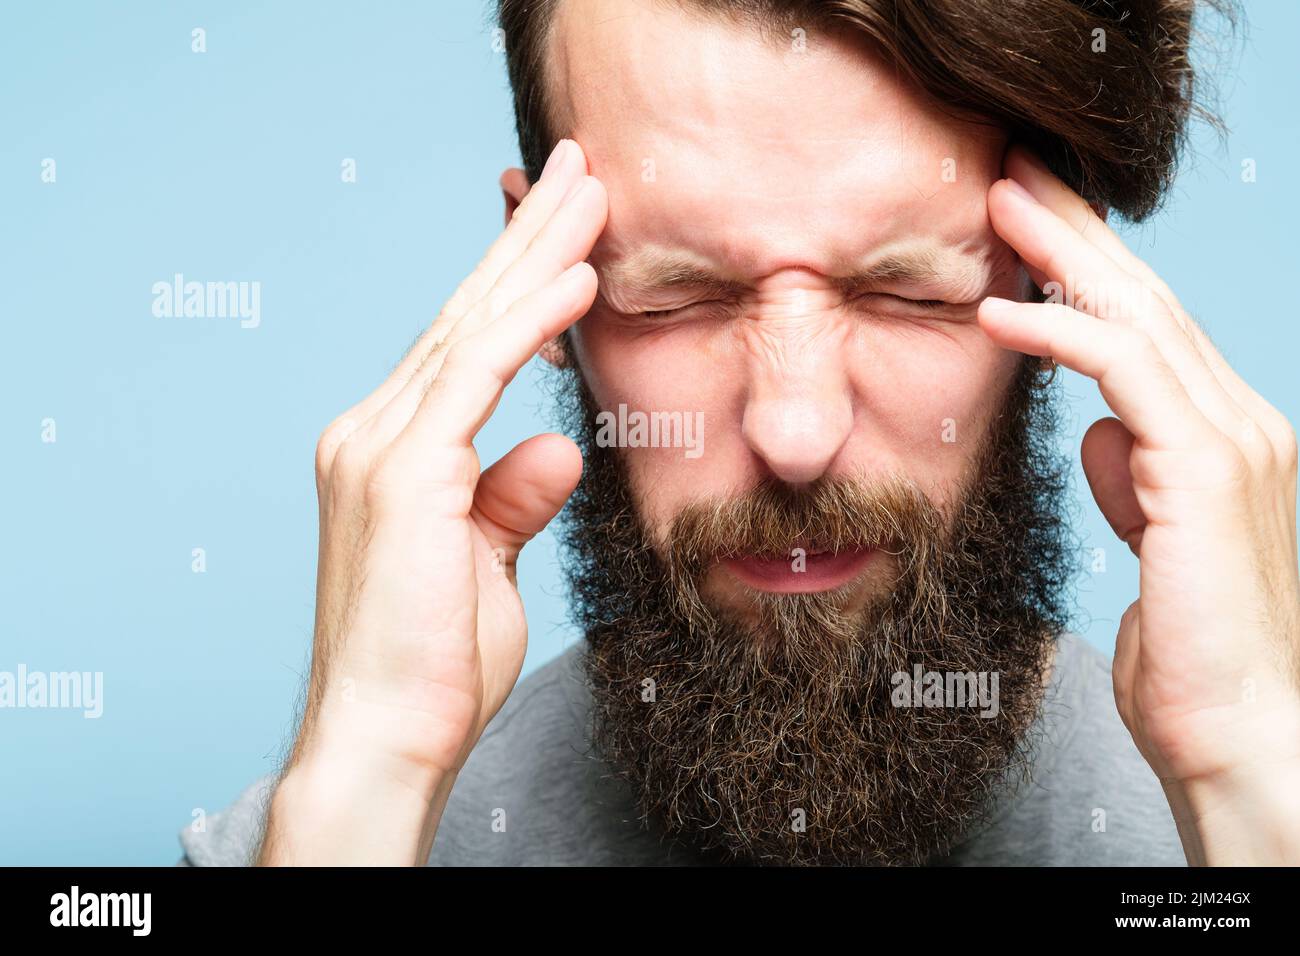 headache migraine man pain discomfort stress Stock Photo